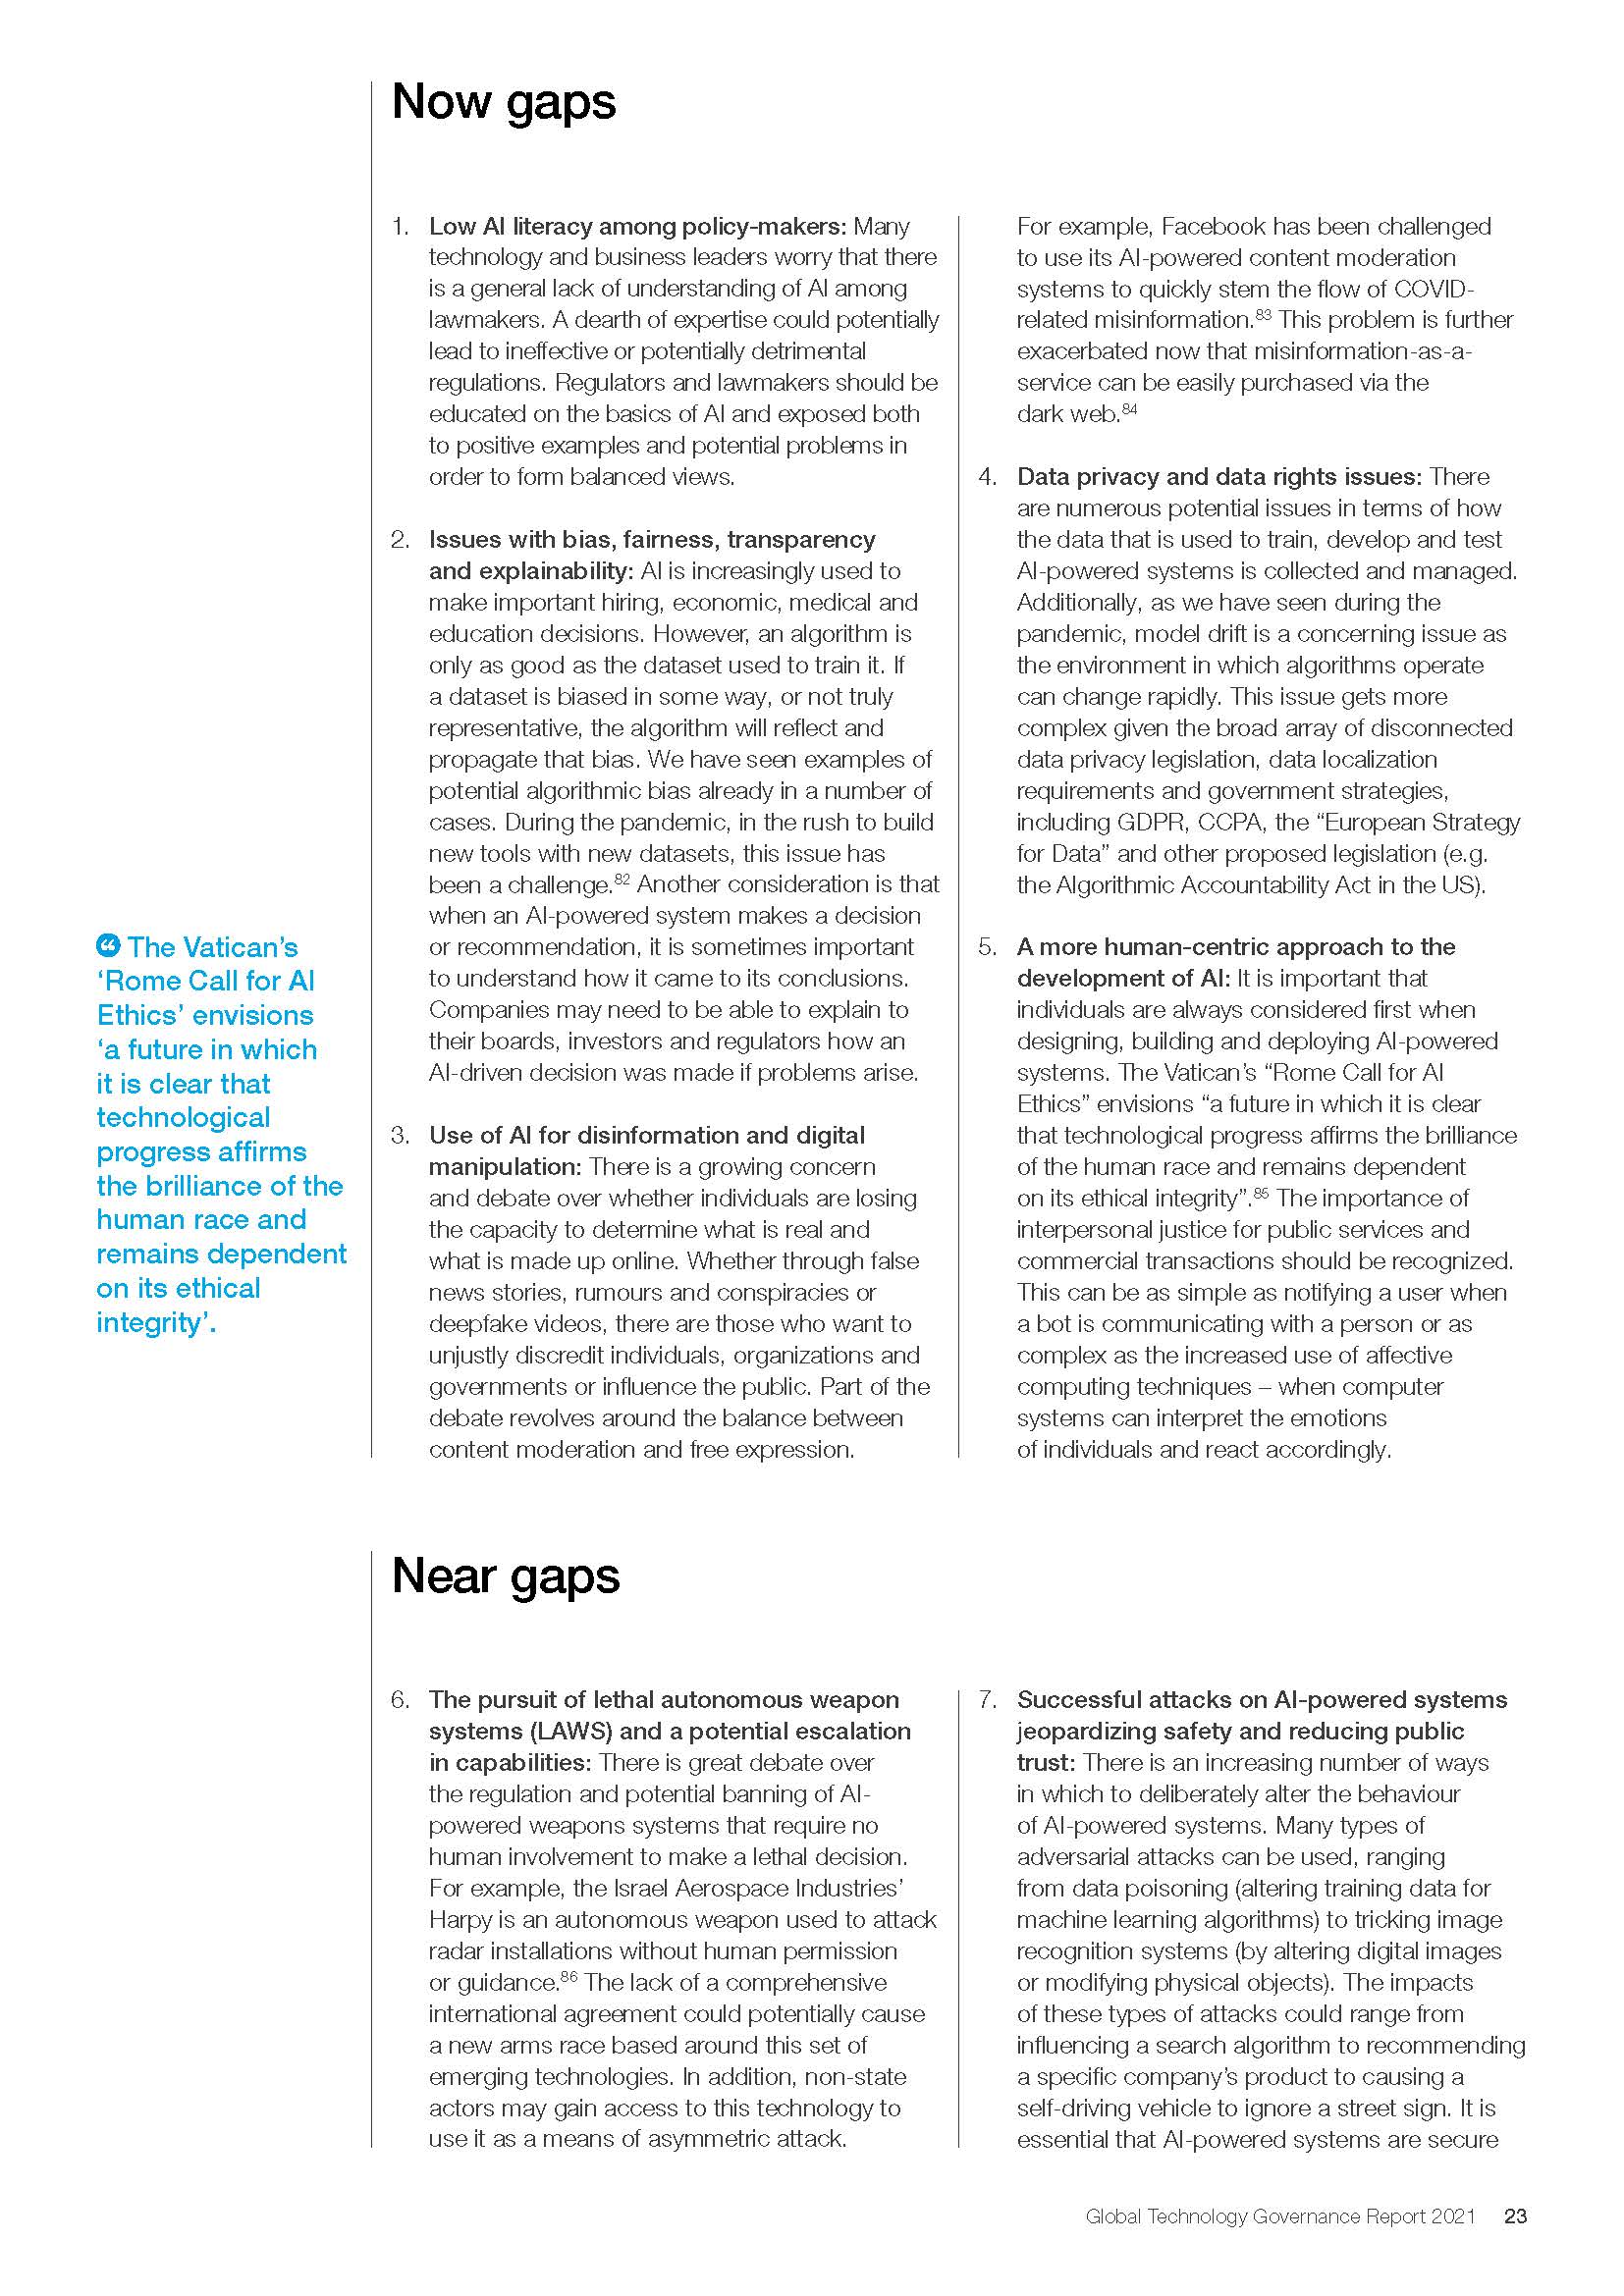 Global Technology Governance Report 2021_页面_23.jpg